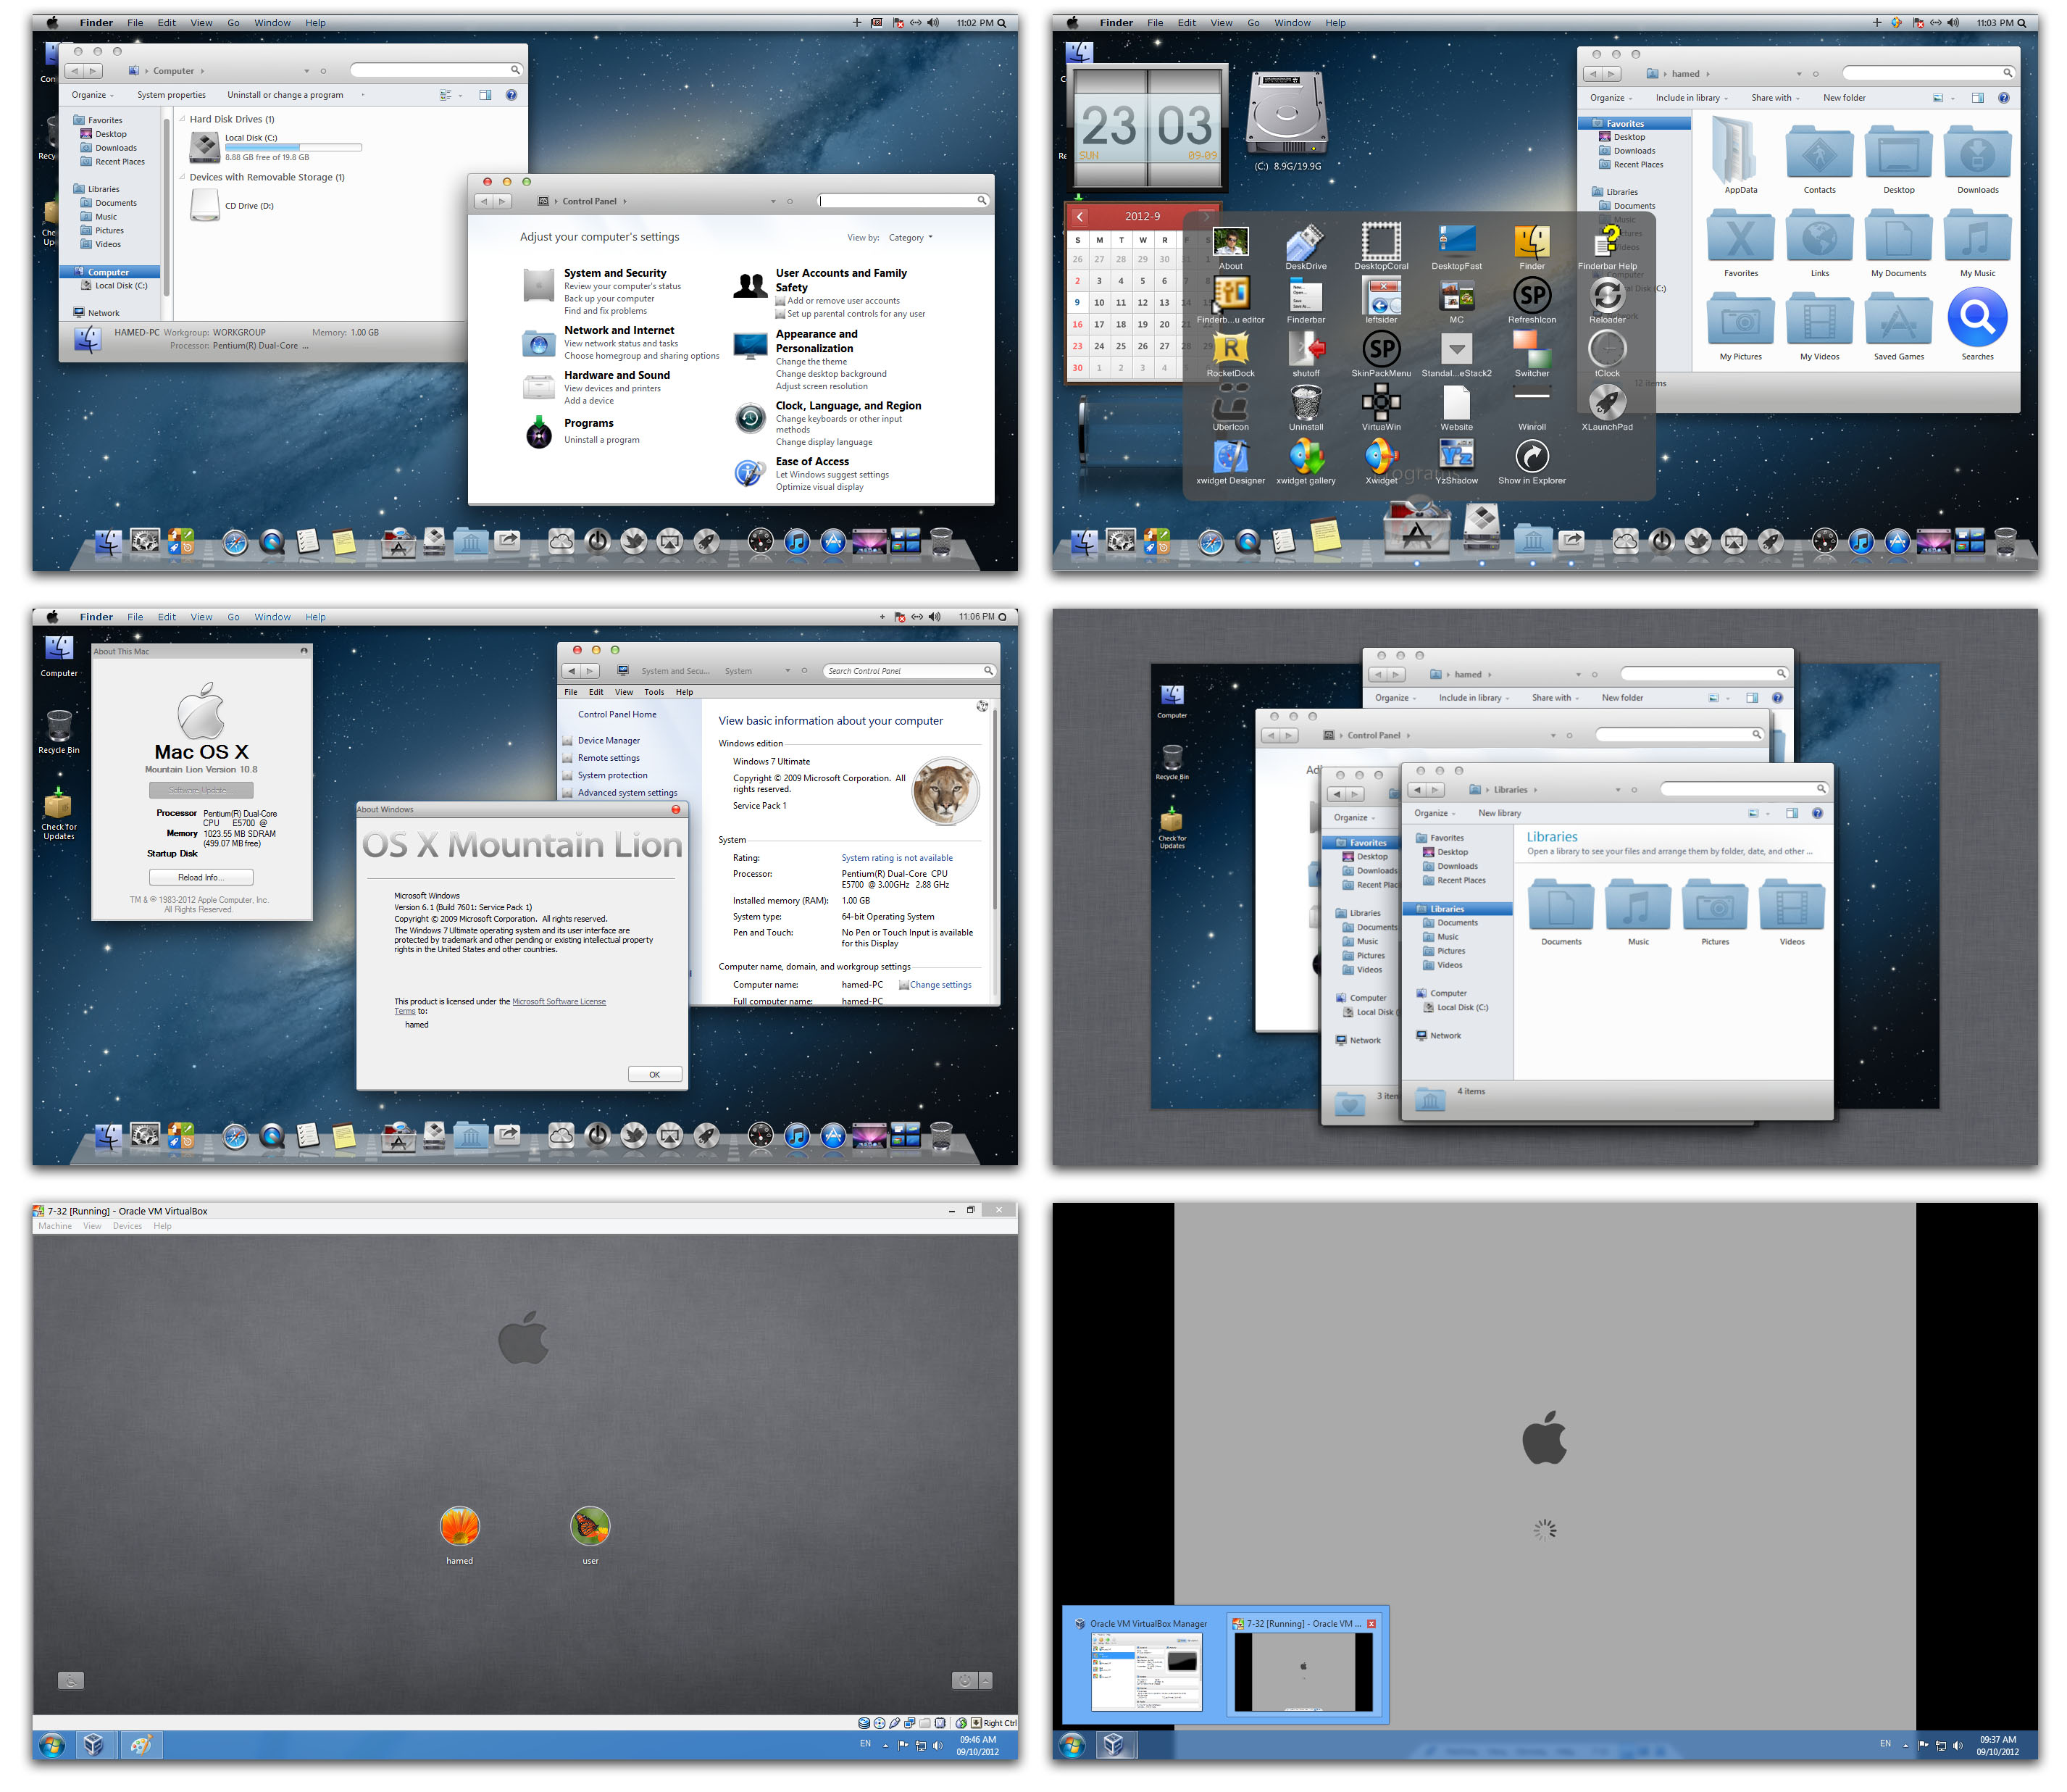 mac os x mountain lion theme for windows xp free download